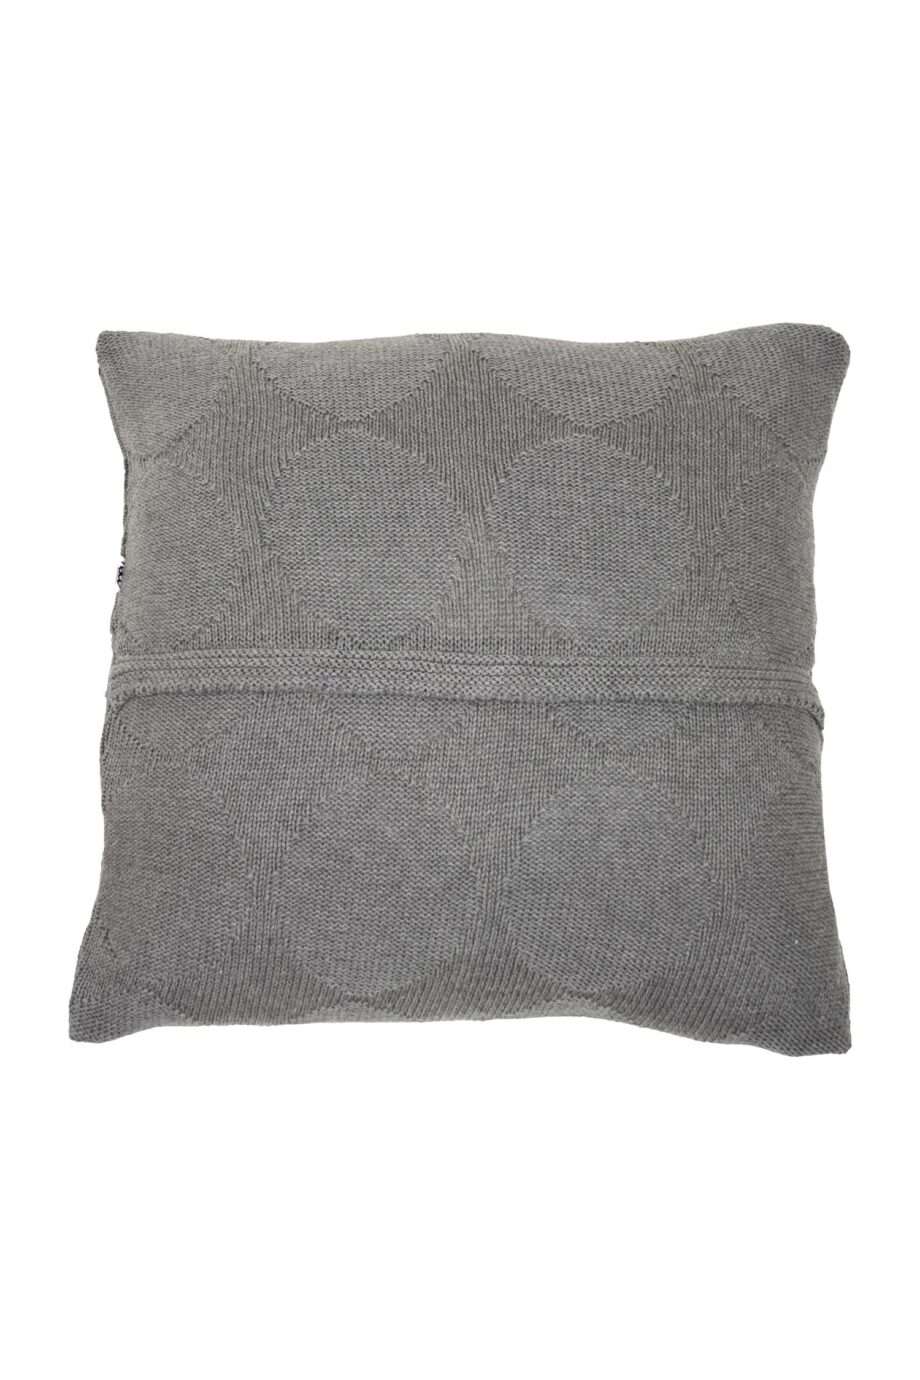 spots grey knitted cotton pillowcase medium